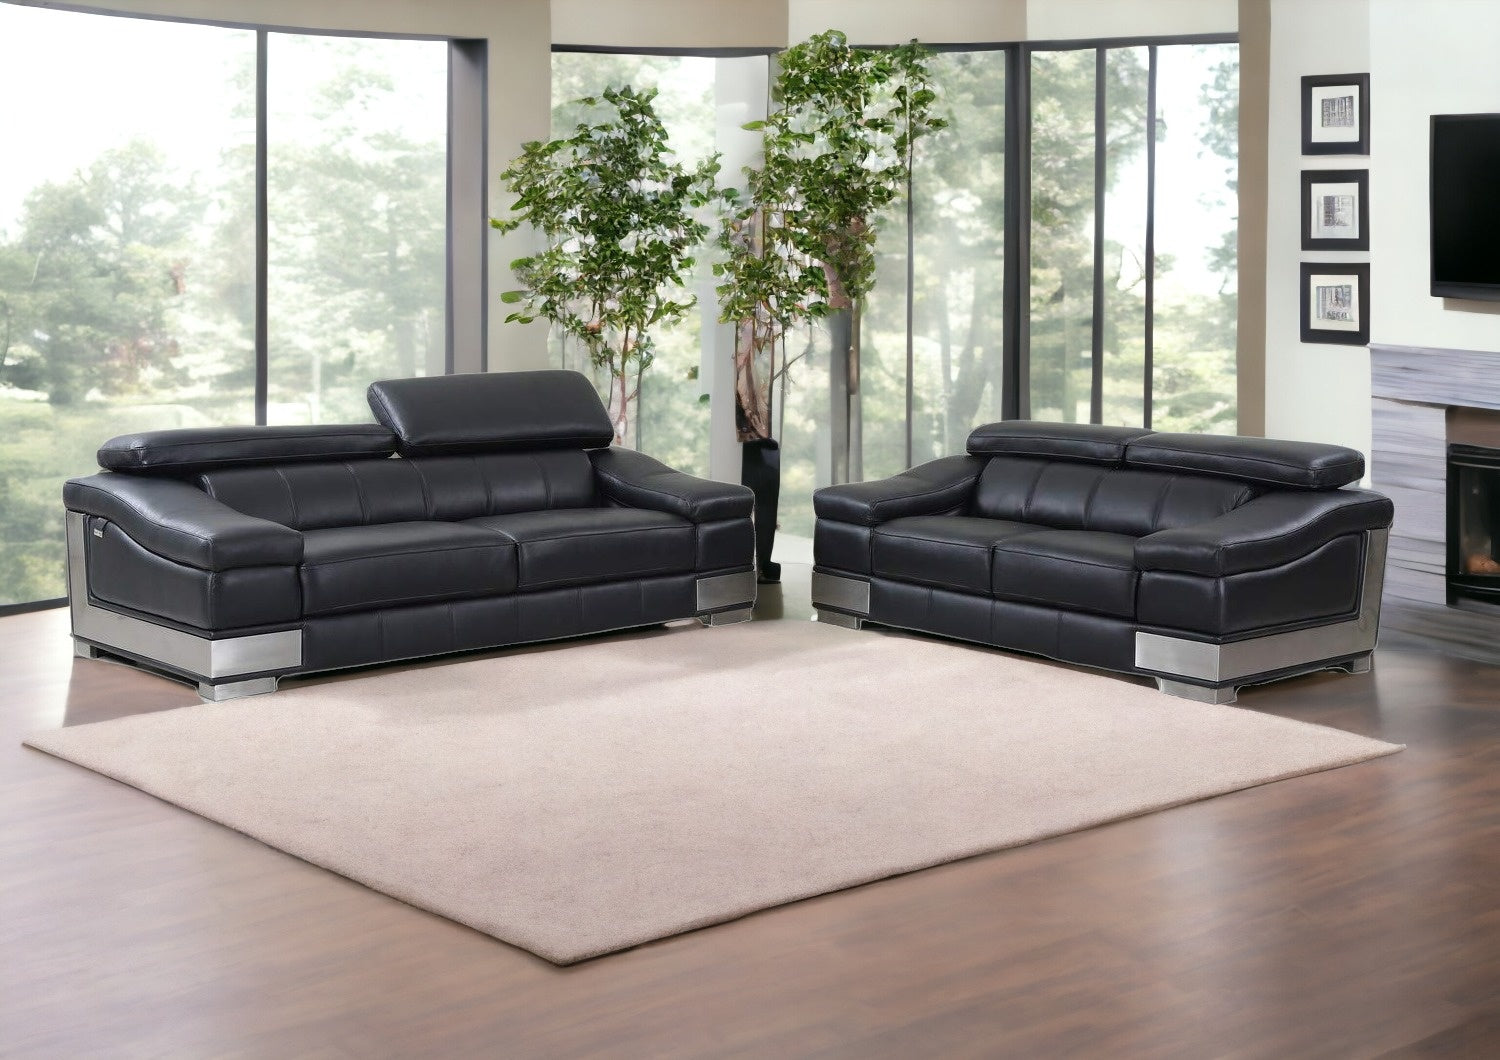 92" Black And Silver Italian Leather Sofa